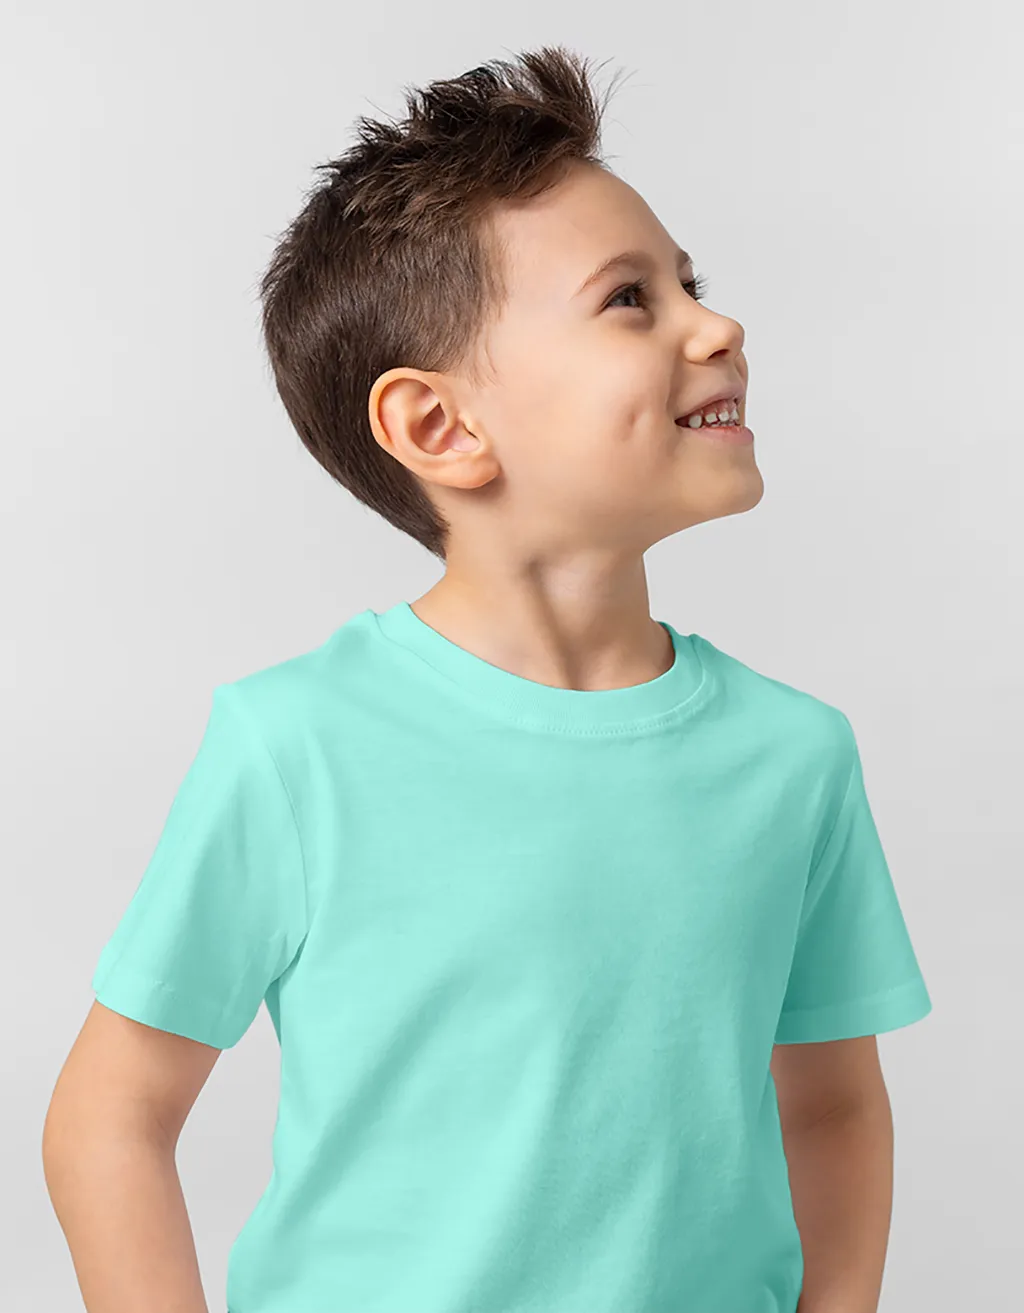 mint green kids t shirt for boys online india